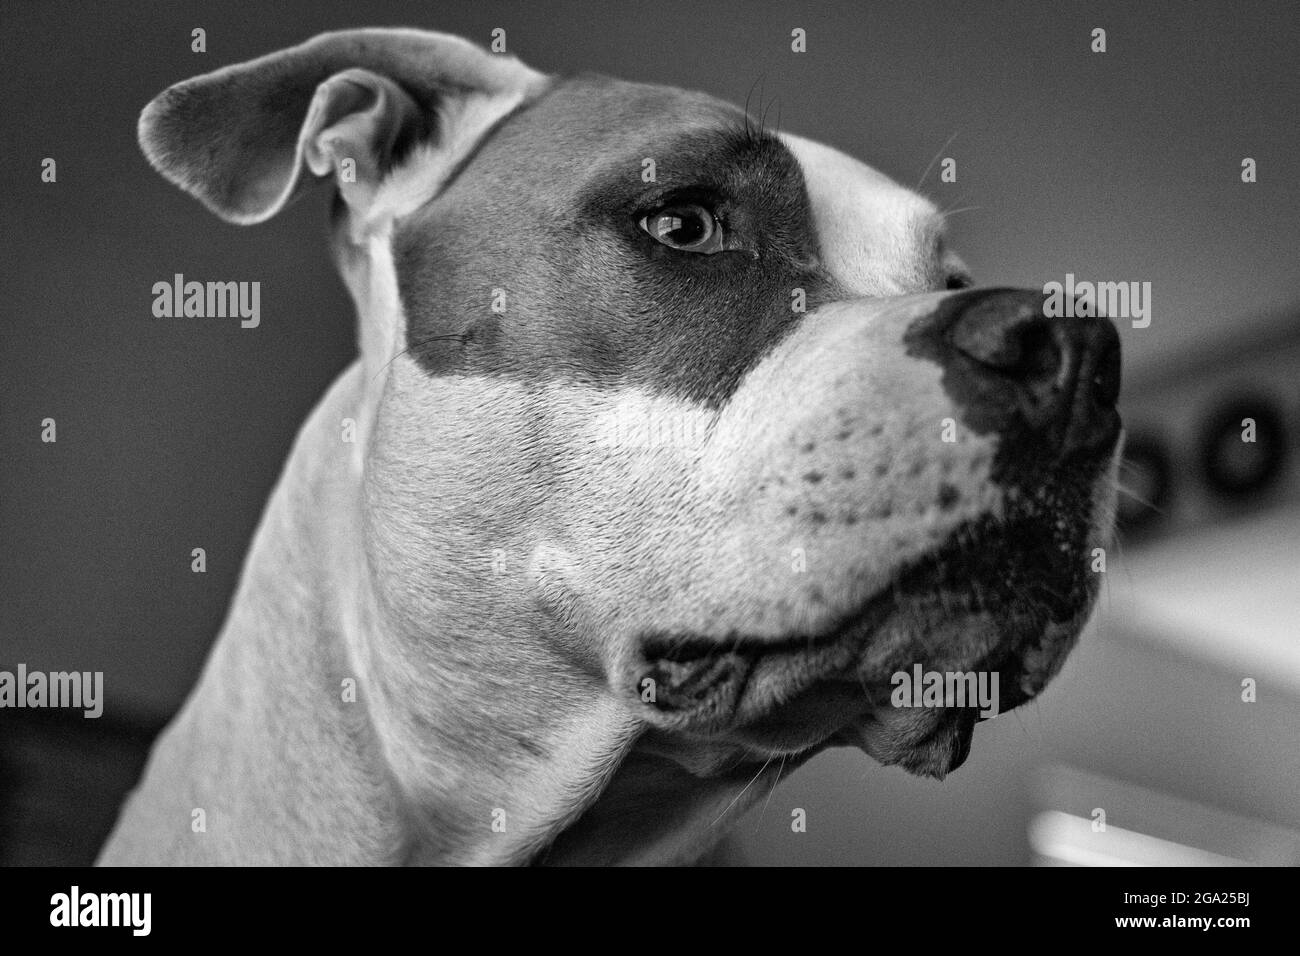 Nahaufnahme eines Mischlingshundes (American Staffordshire Pit Bull Terrier und American Pit Bull Terrier) (Canis lupus familiaris), der besorgt aussagt Stockfoto